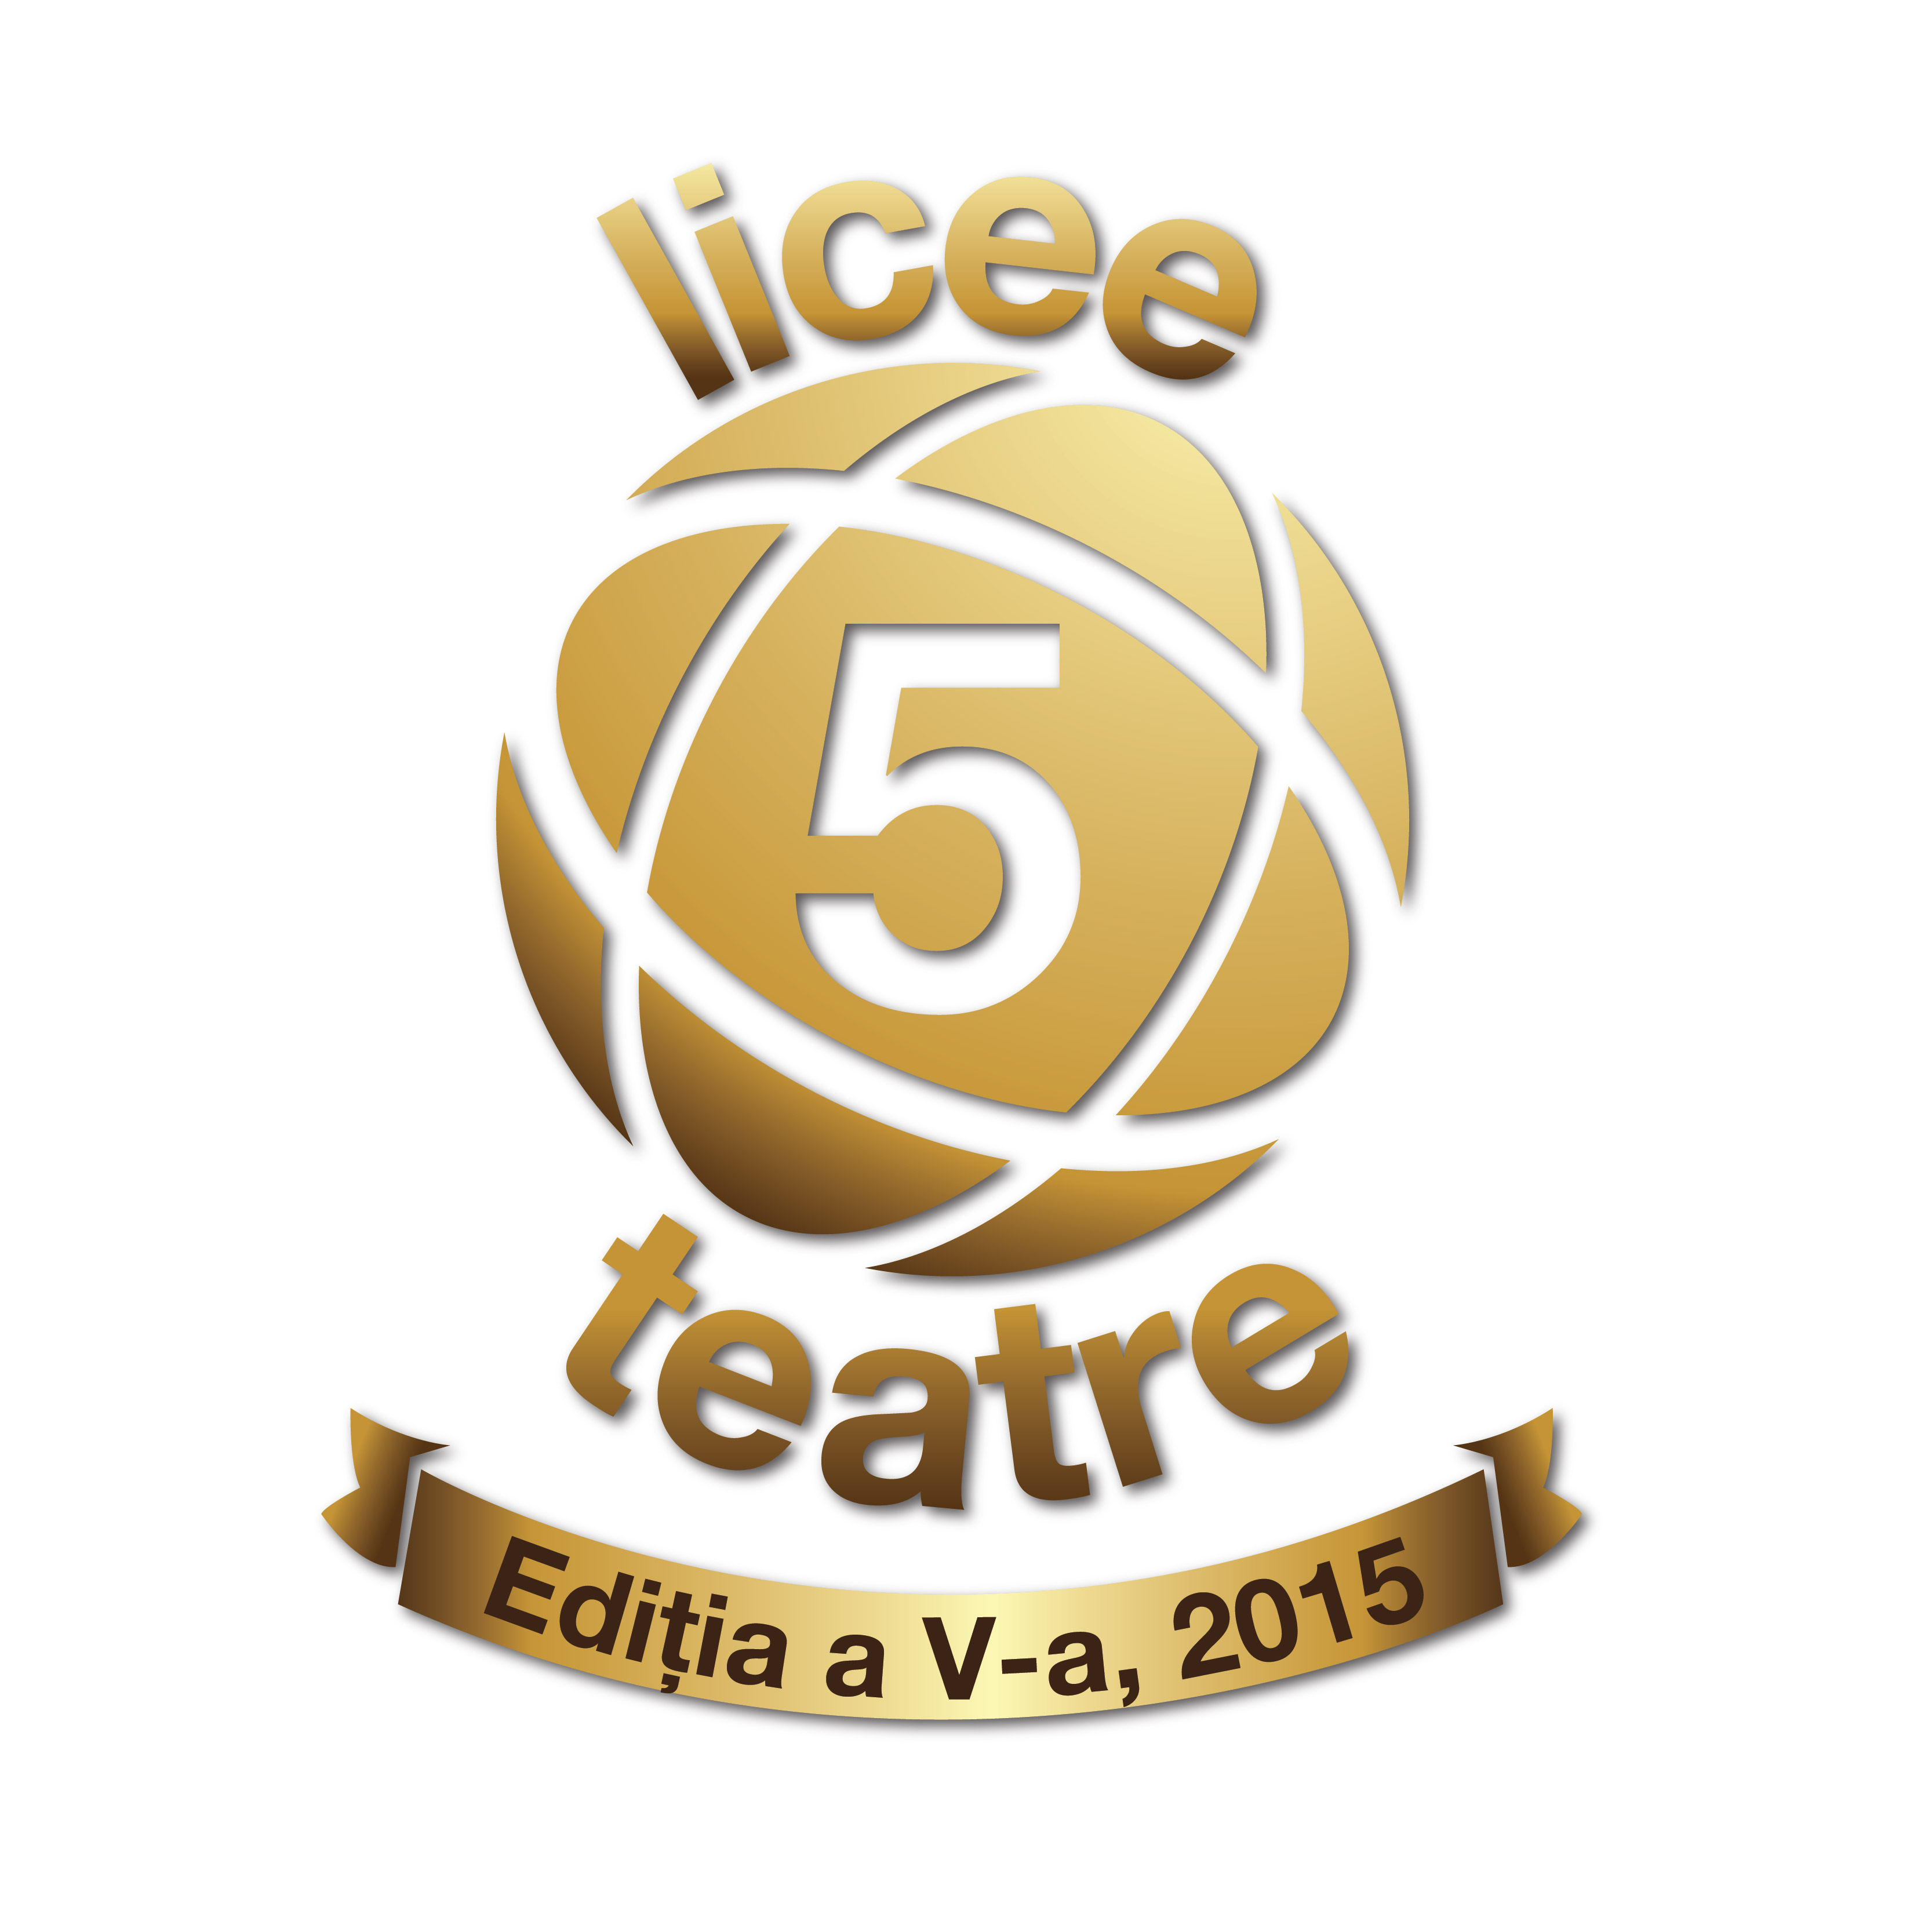 ECDL_2015_026_5Licee-5Teatre_Logo_v01-02.jpg